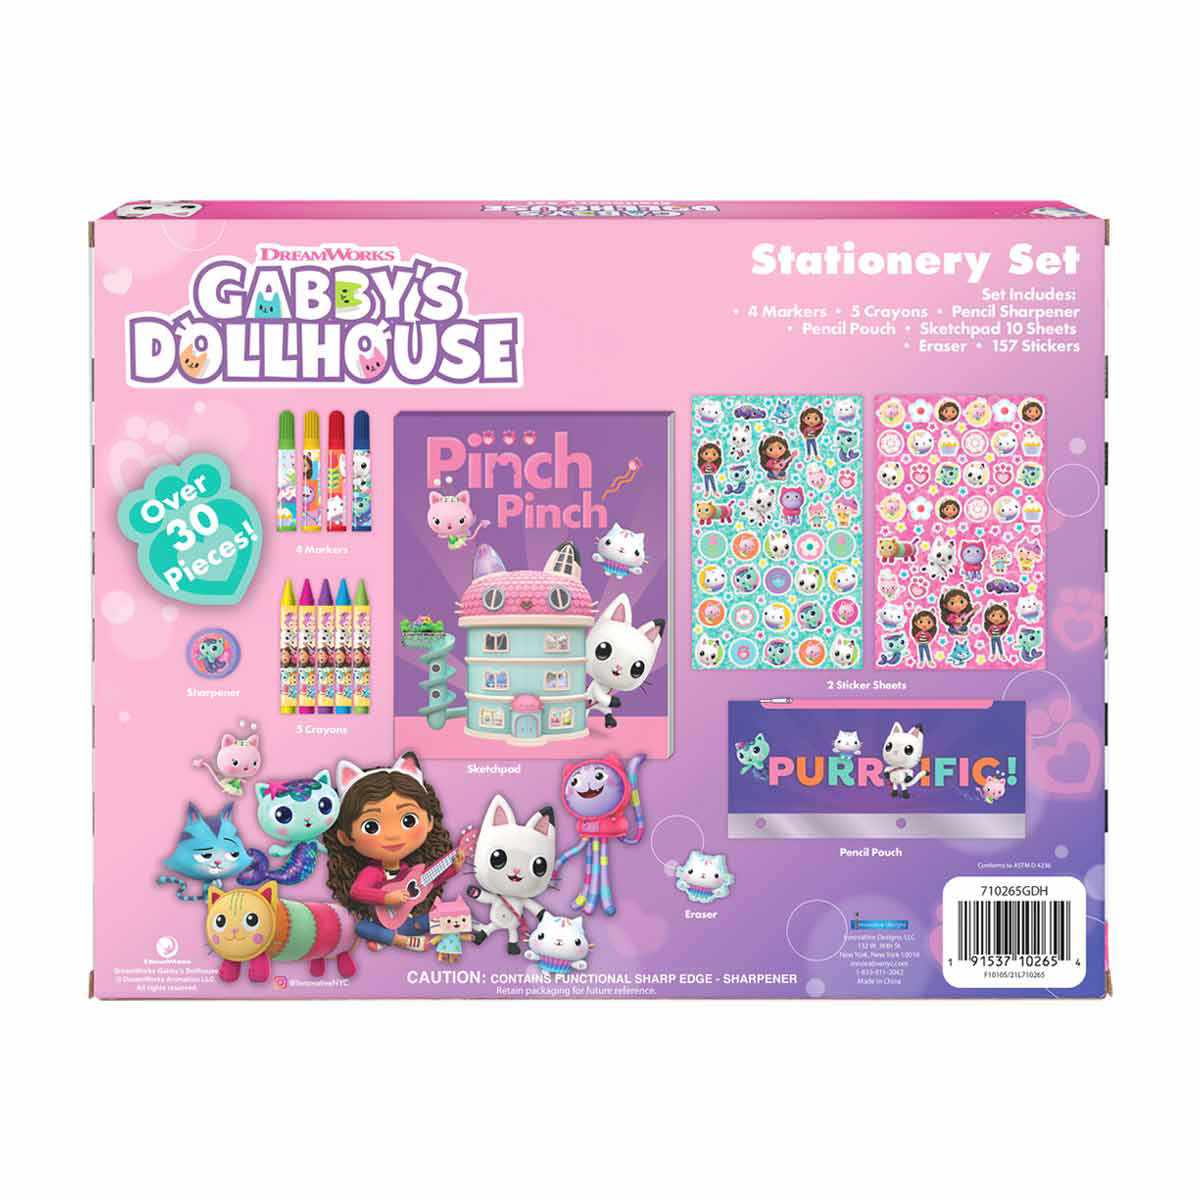 Gabbys Dollhouse Stationery Set - 11 PC Bundle with Gabbys Dollhouse Folder, Notebook, Erasers, Case, Stickers, and More Gabbys Dollhouse School S